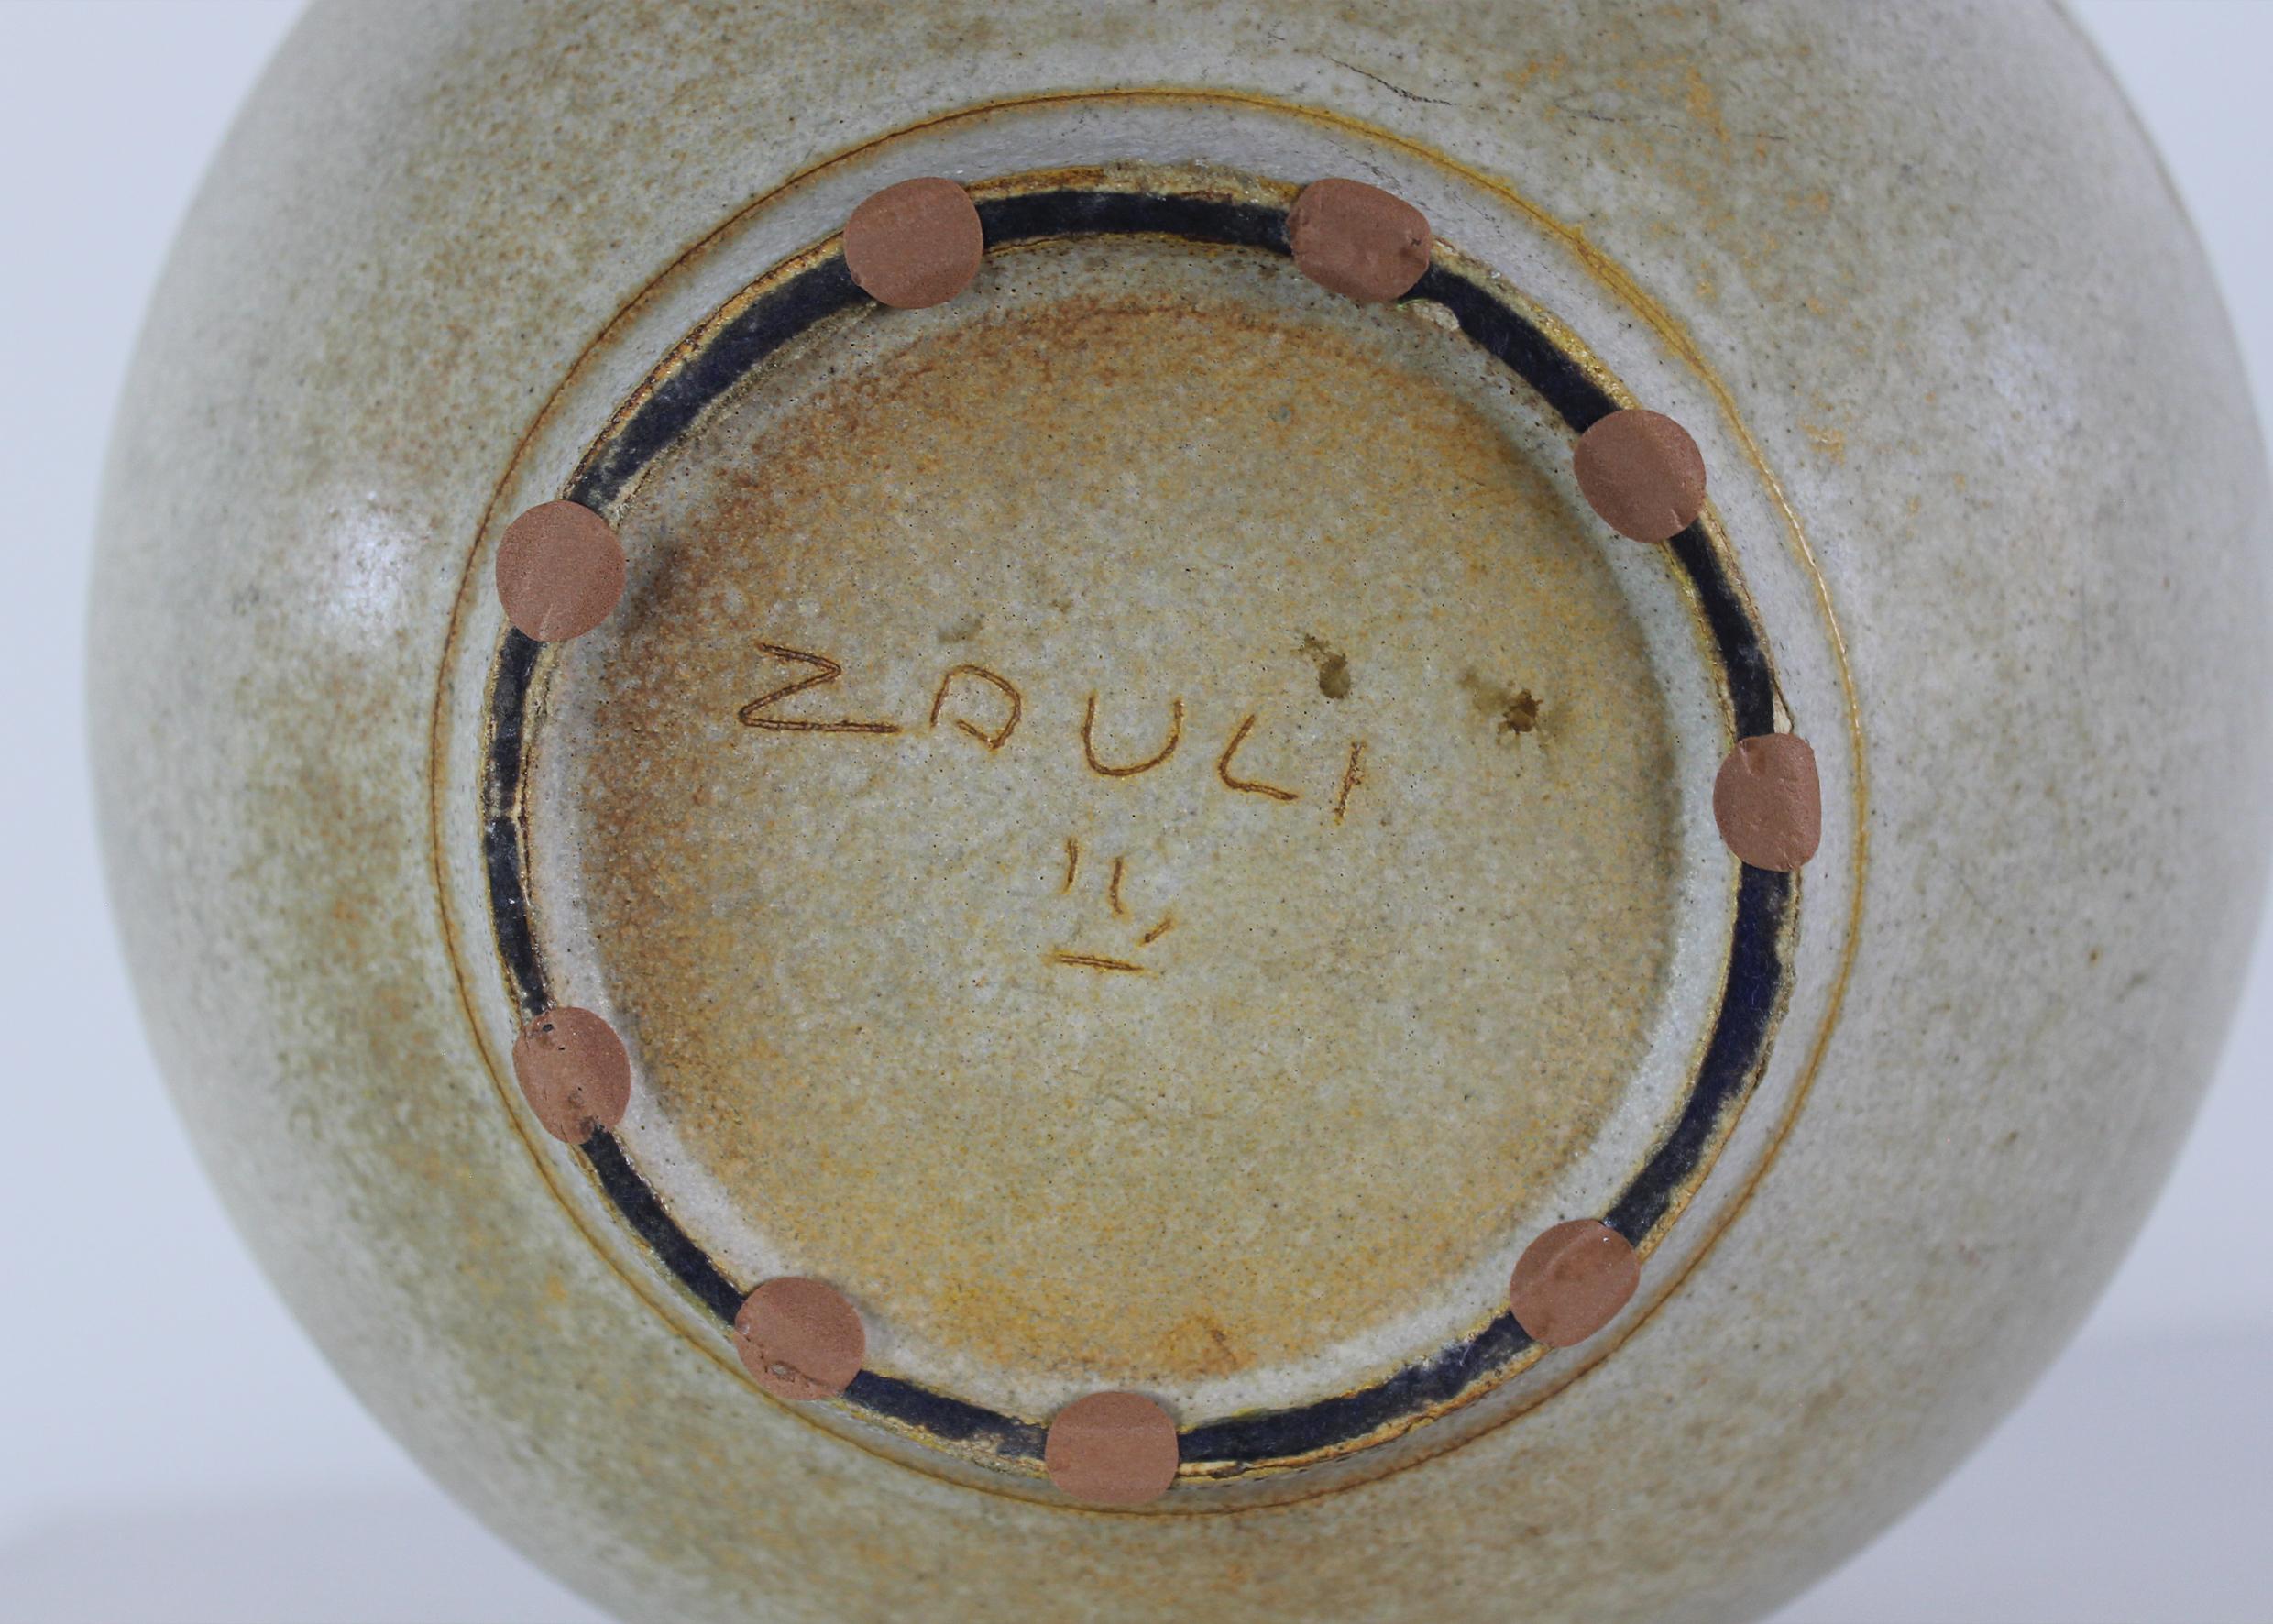 Mid-20th Century Decorative Vase in Stoneware with Signature by Carlo Zauli 1960s Italy For Sale